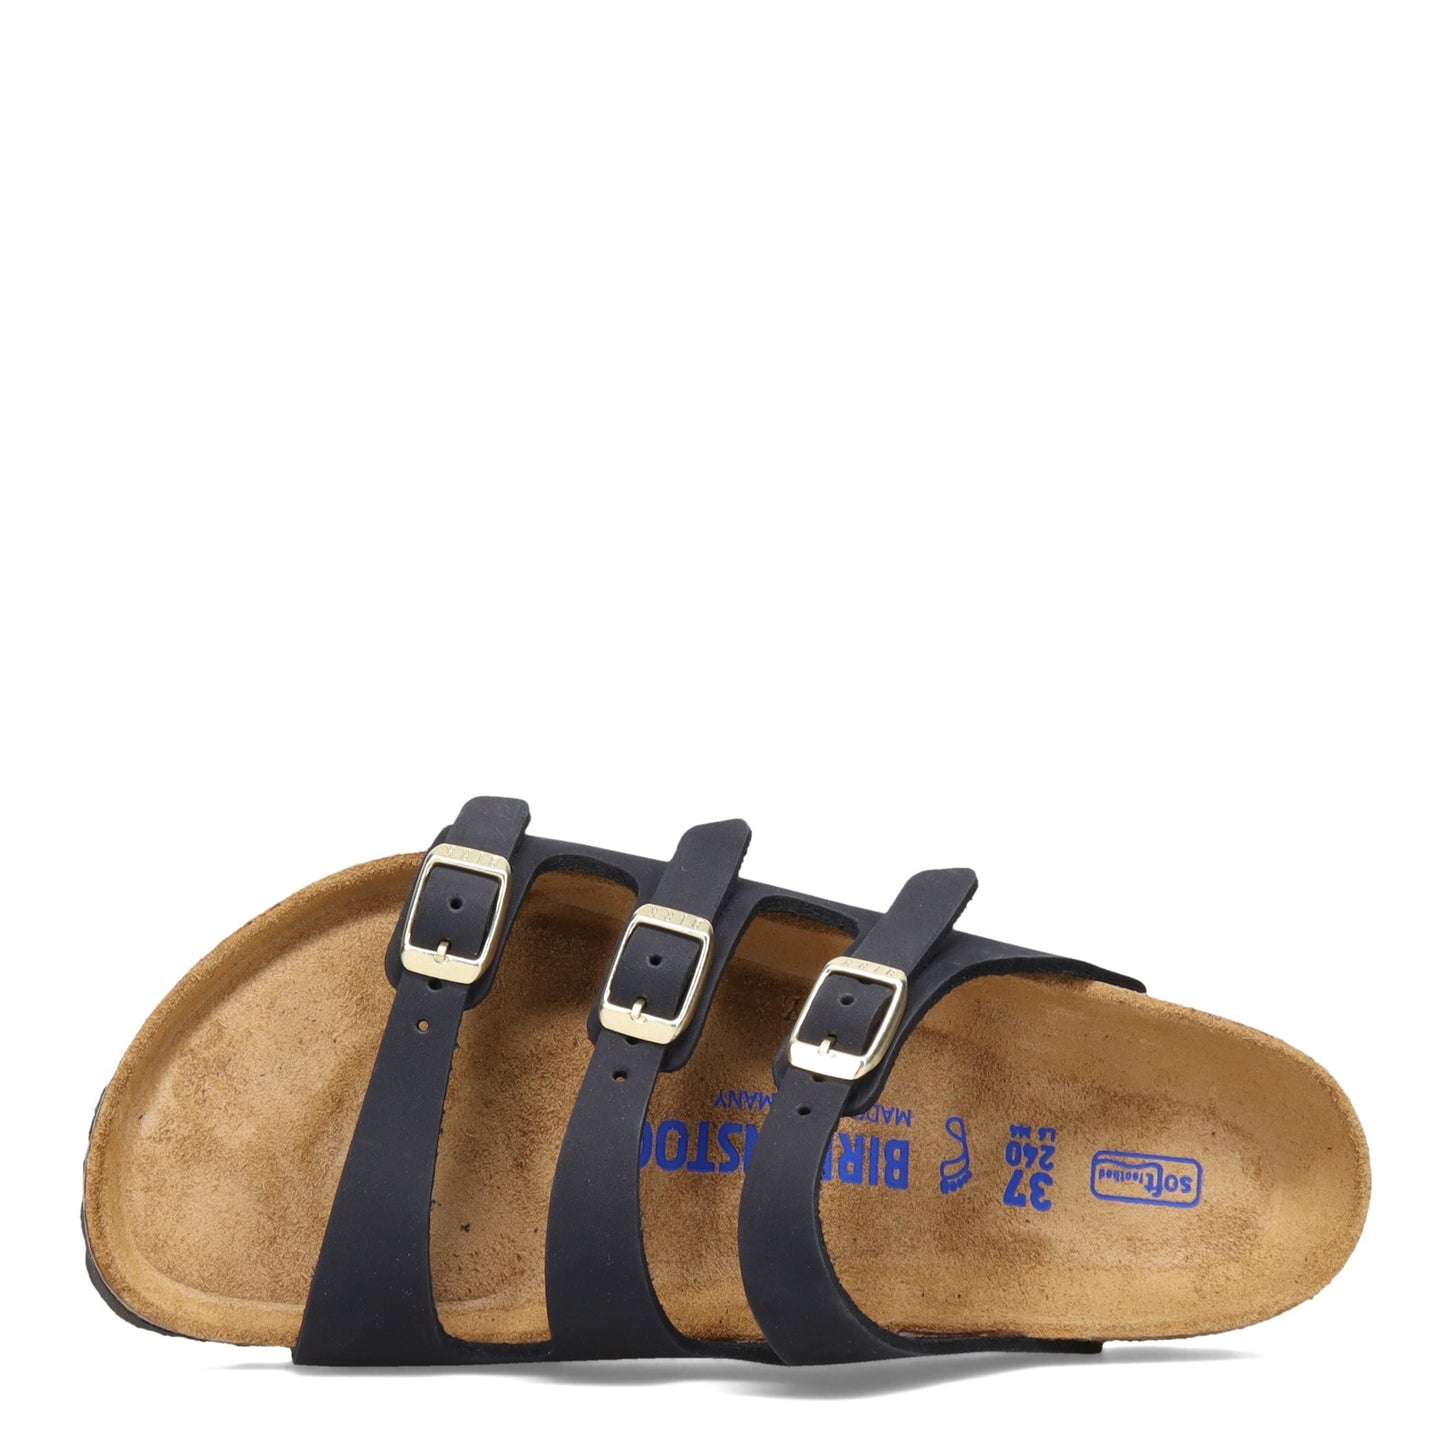 Peltz Shoes  Women's Birkenstock Florida Soft Footbed Sandal  - Regular Width MIDNIGHT 1020 930 R